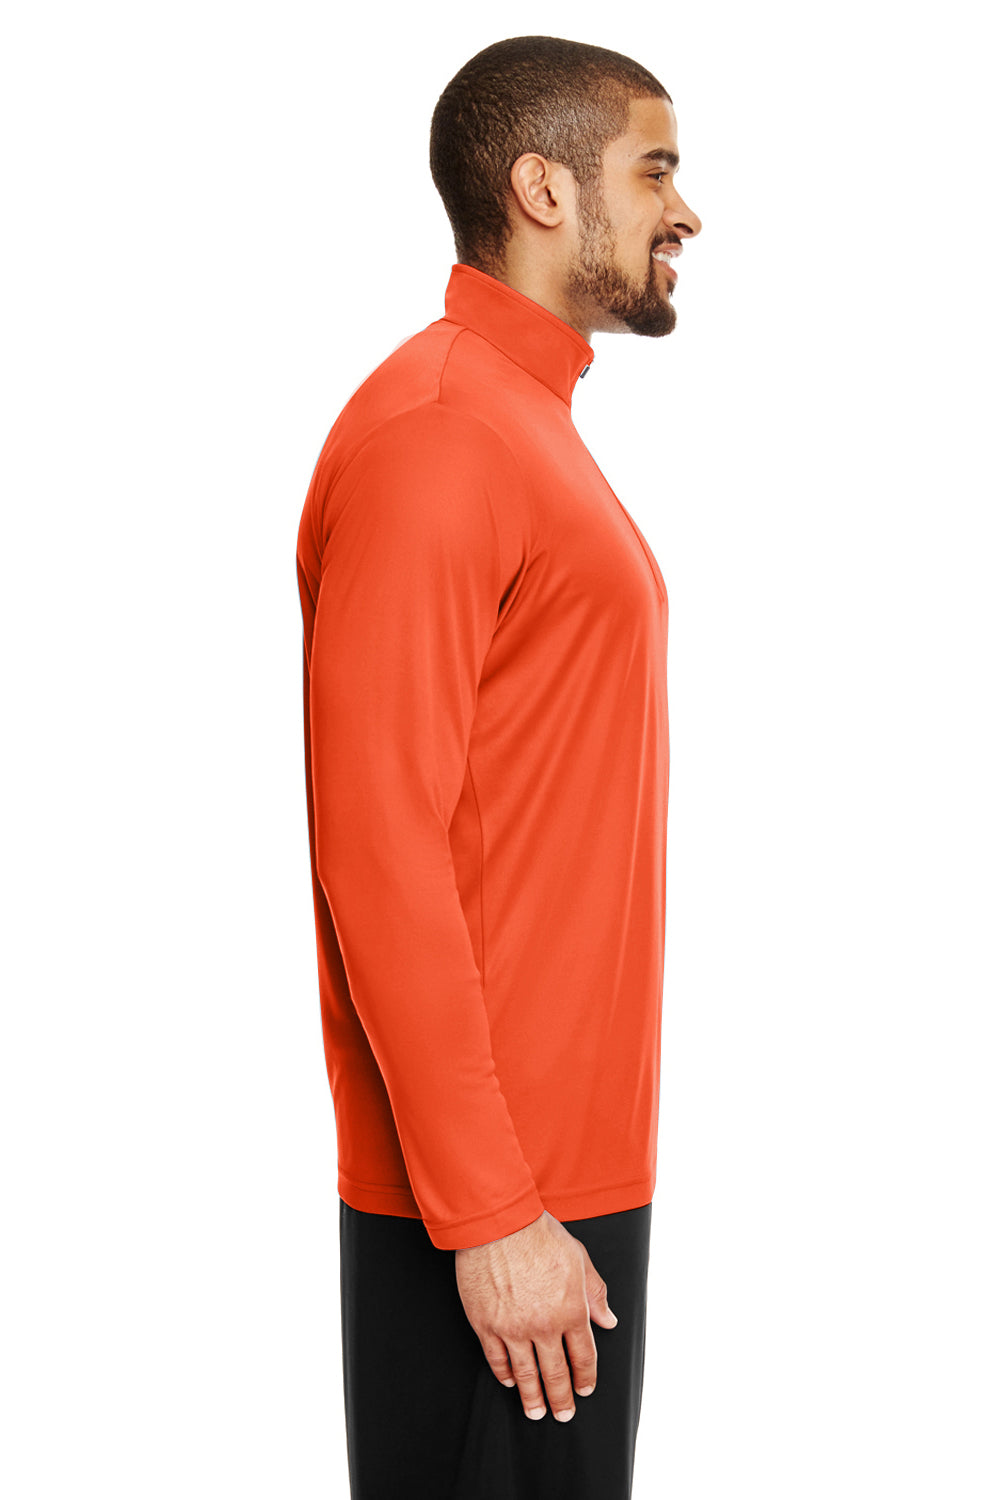 Team 365 TT31 Mens Zone Performance Moisture Wicking 1/4 Zip Sweatshirt Orange Side